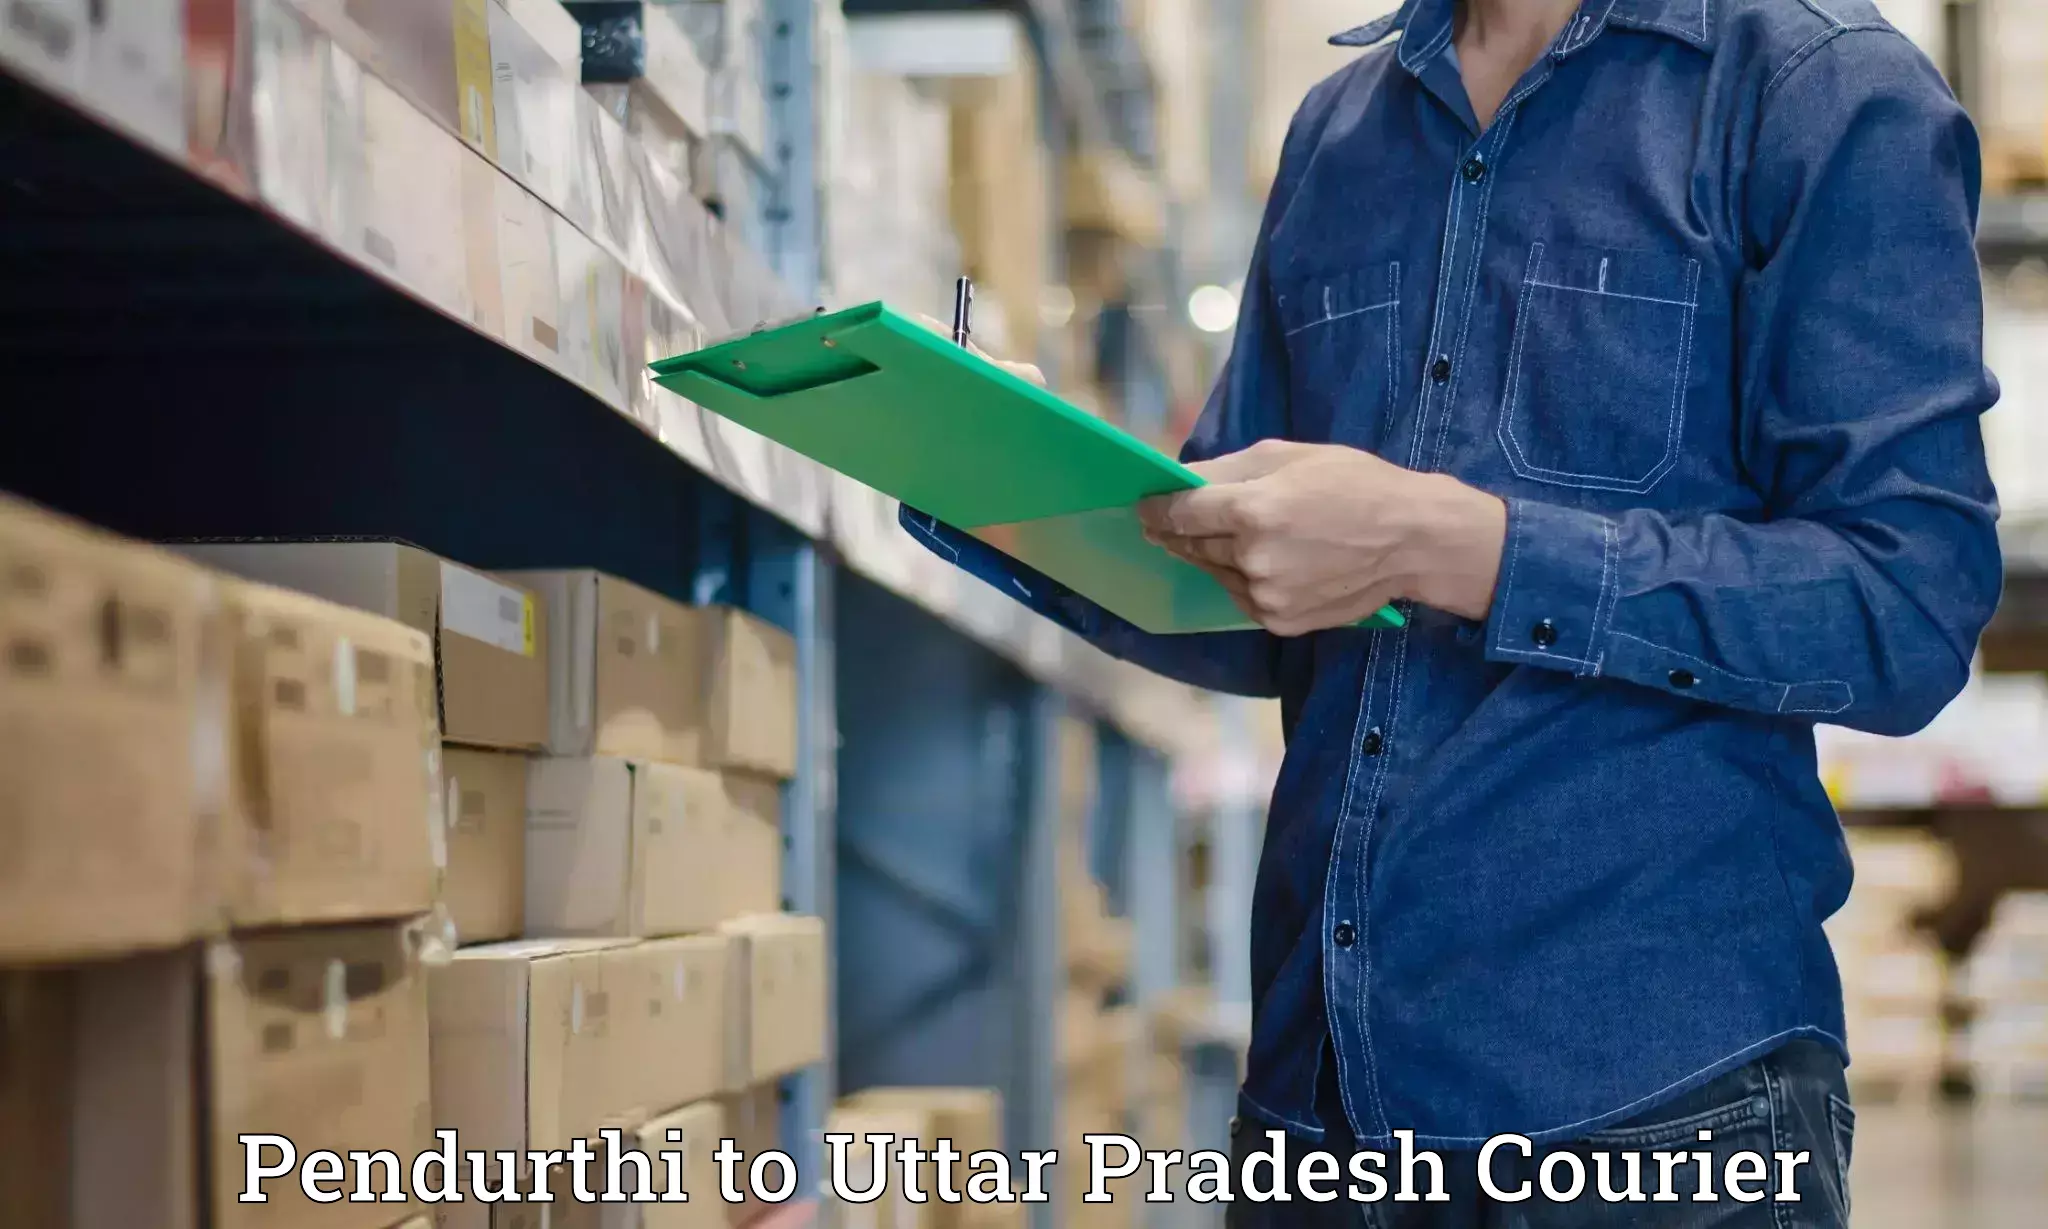 International courier networks Pendurthi to Vrindavan